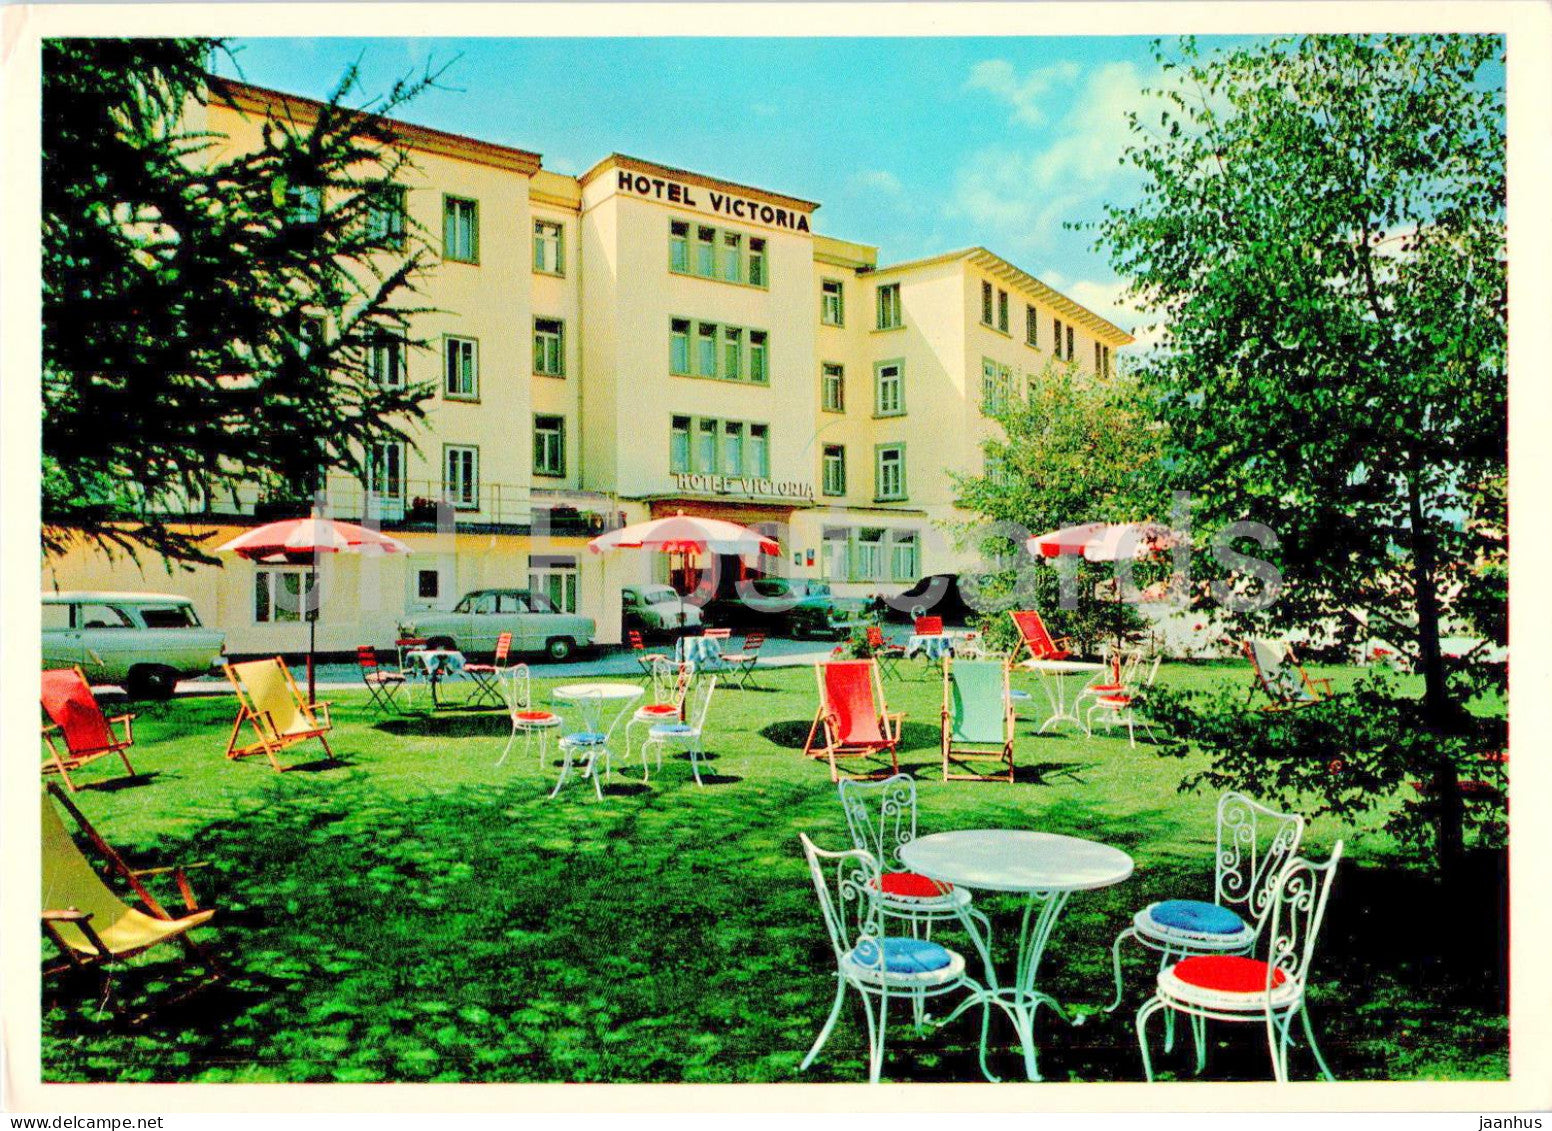 Montana - Grand Hotel Victoria - car - Switzerland - unused - JH Postcards